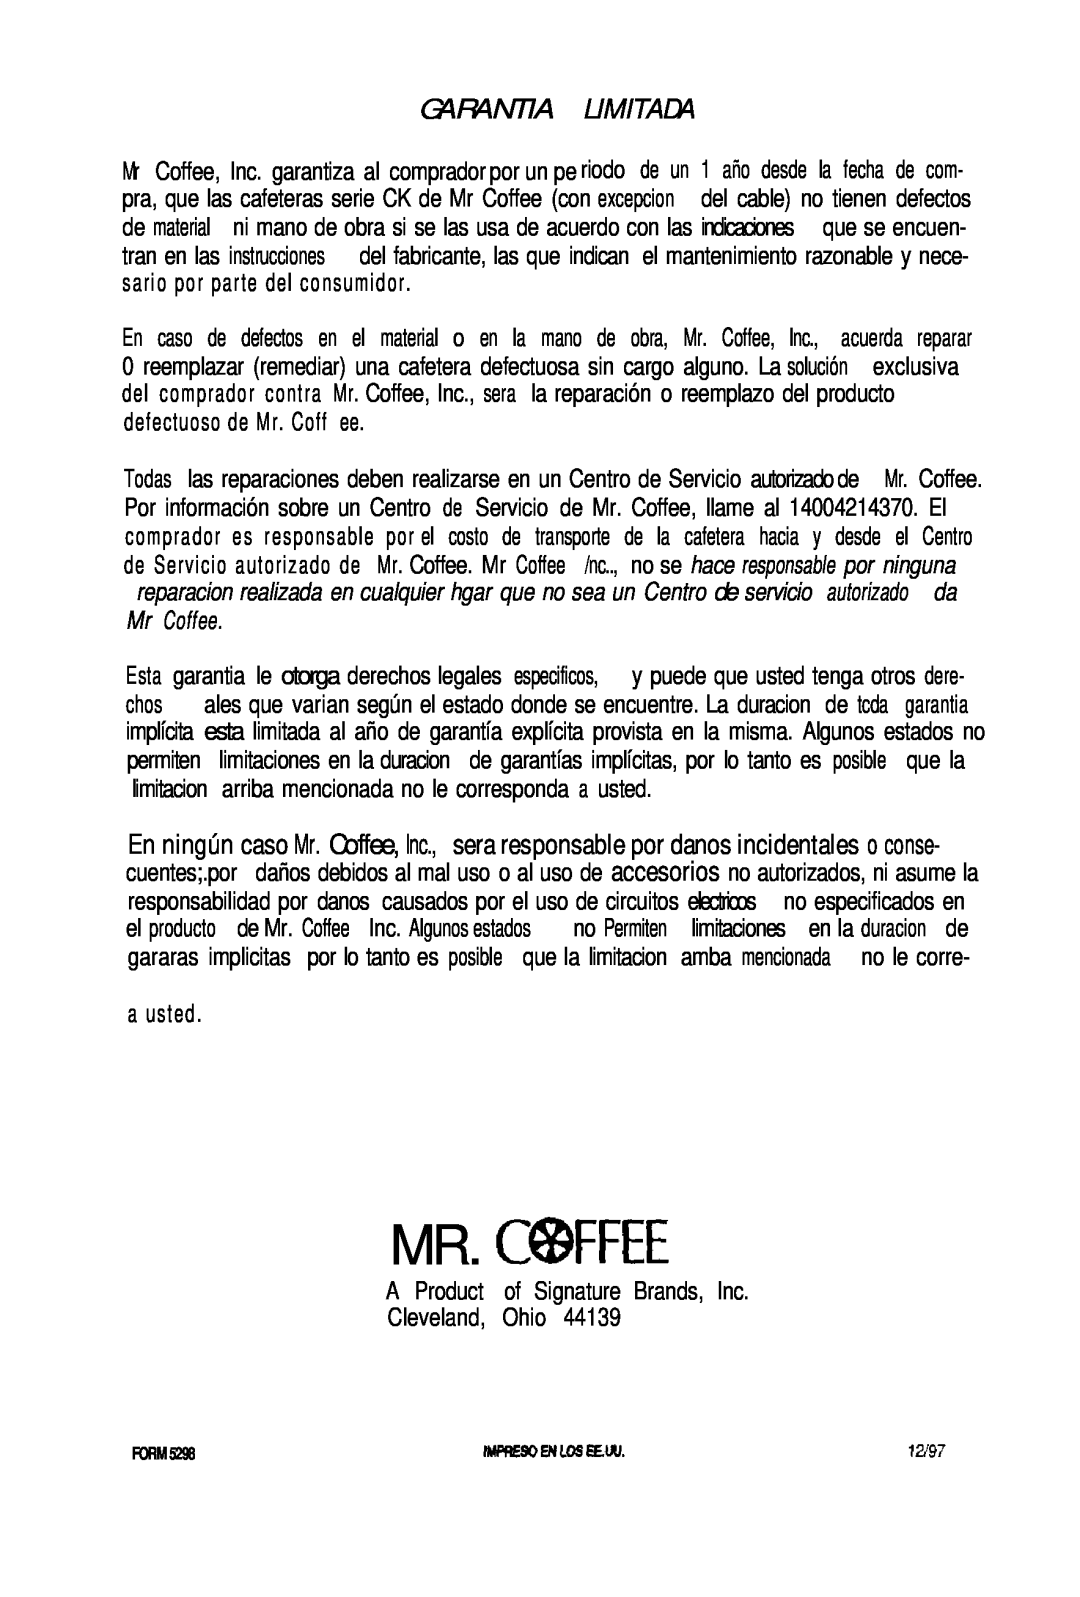 Mr. Coffee CK240 manual Mr. Cwfee, Garantia Limitada 